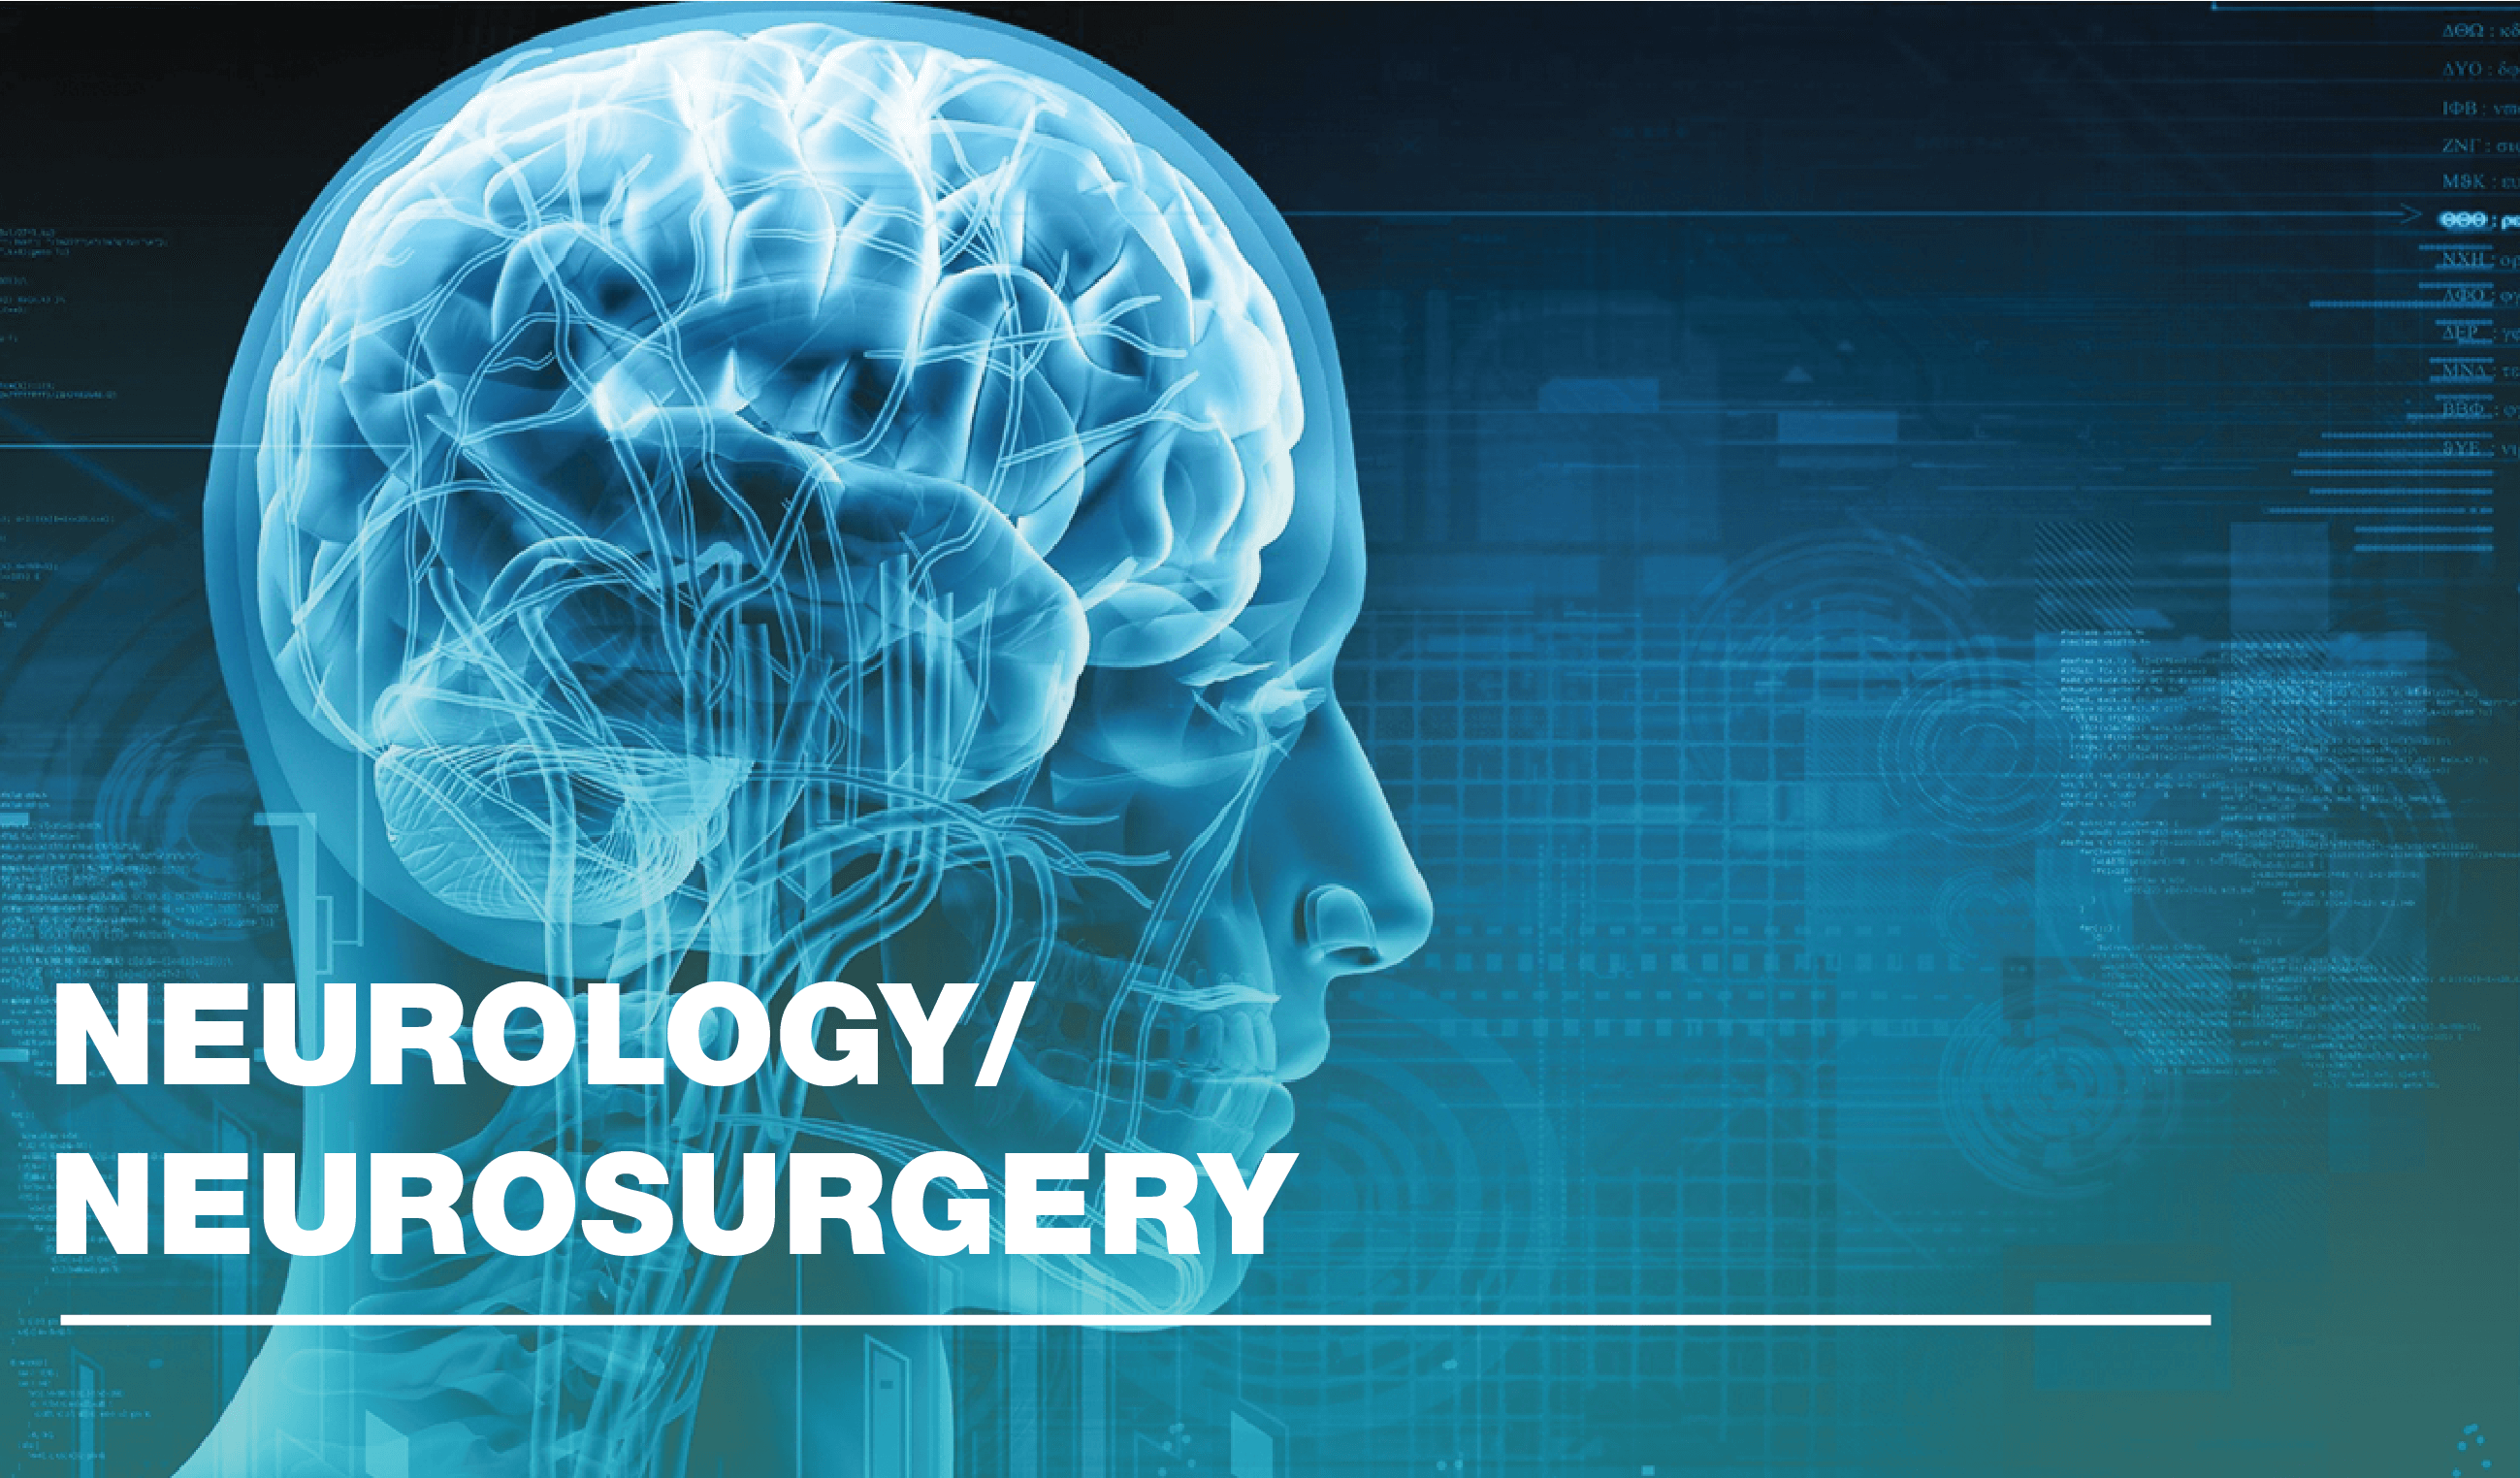 Neurology/Neurosurgery